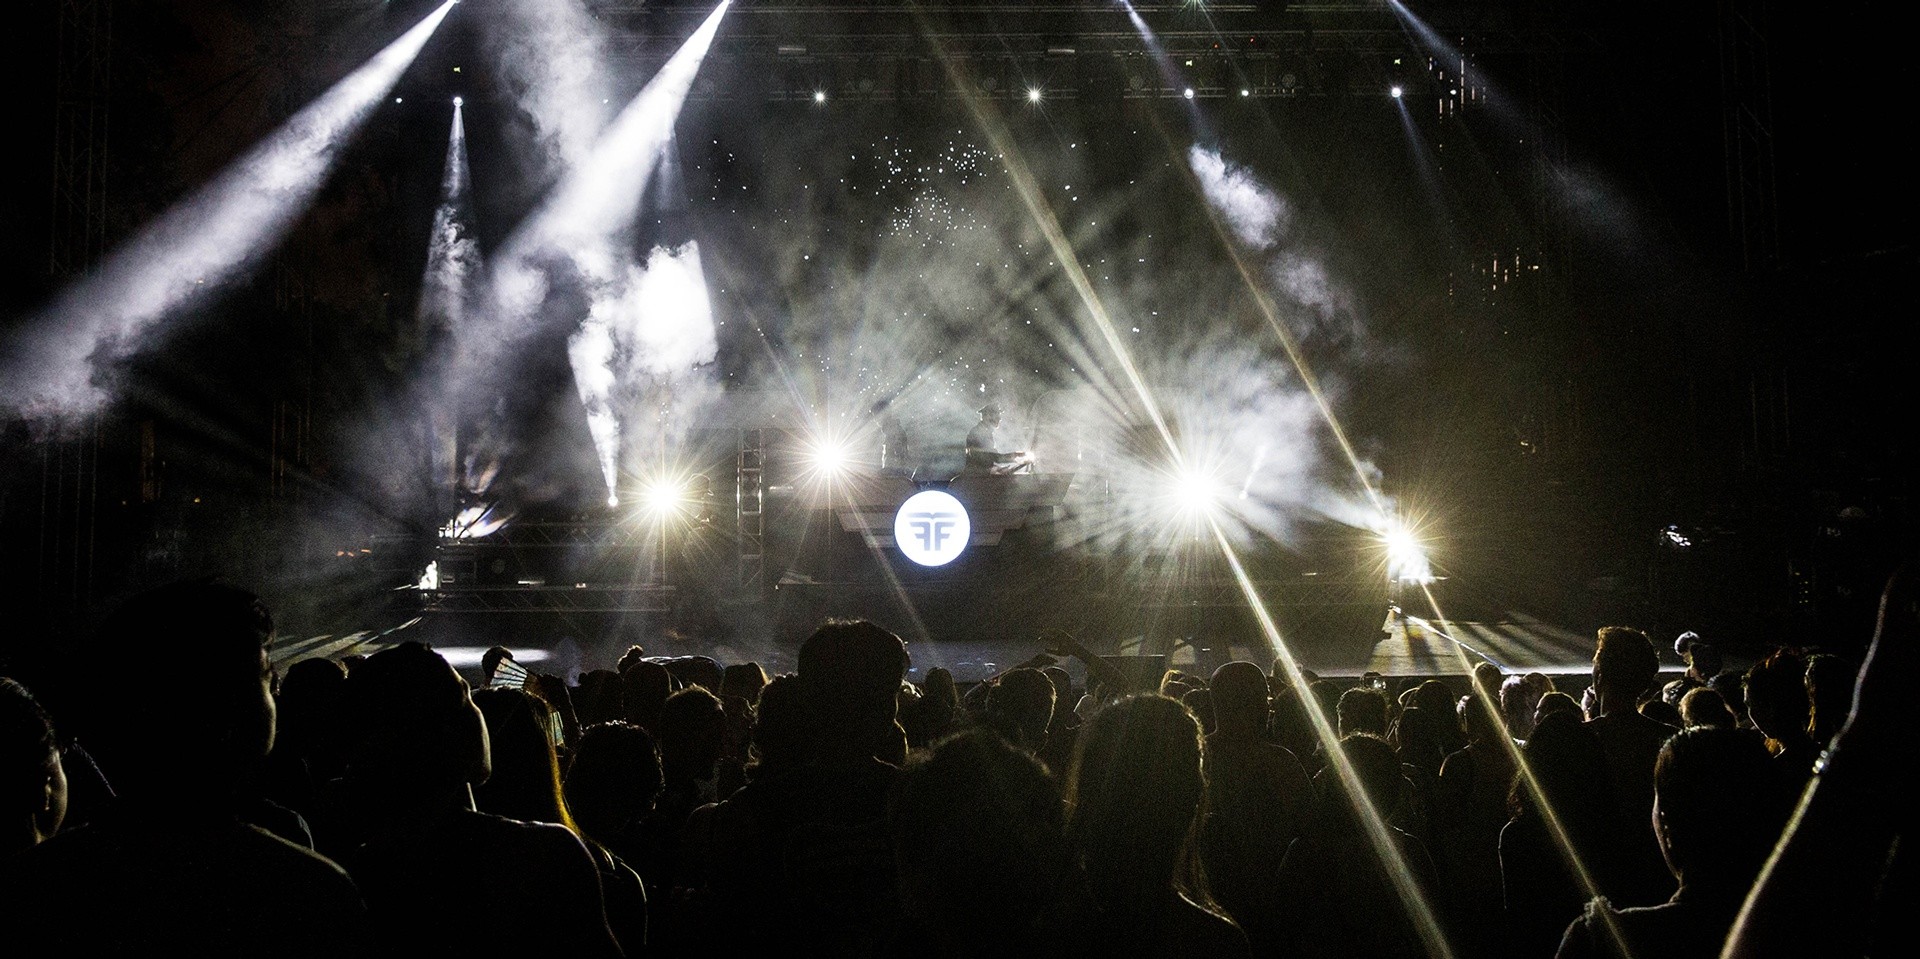 PHOTO GALLERY: Neon Lights Festival 2015